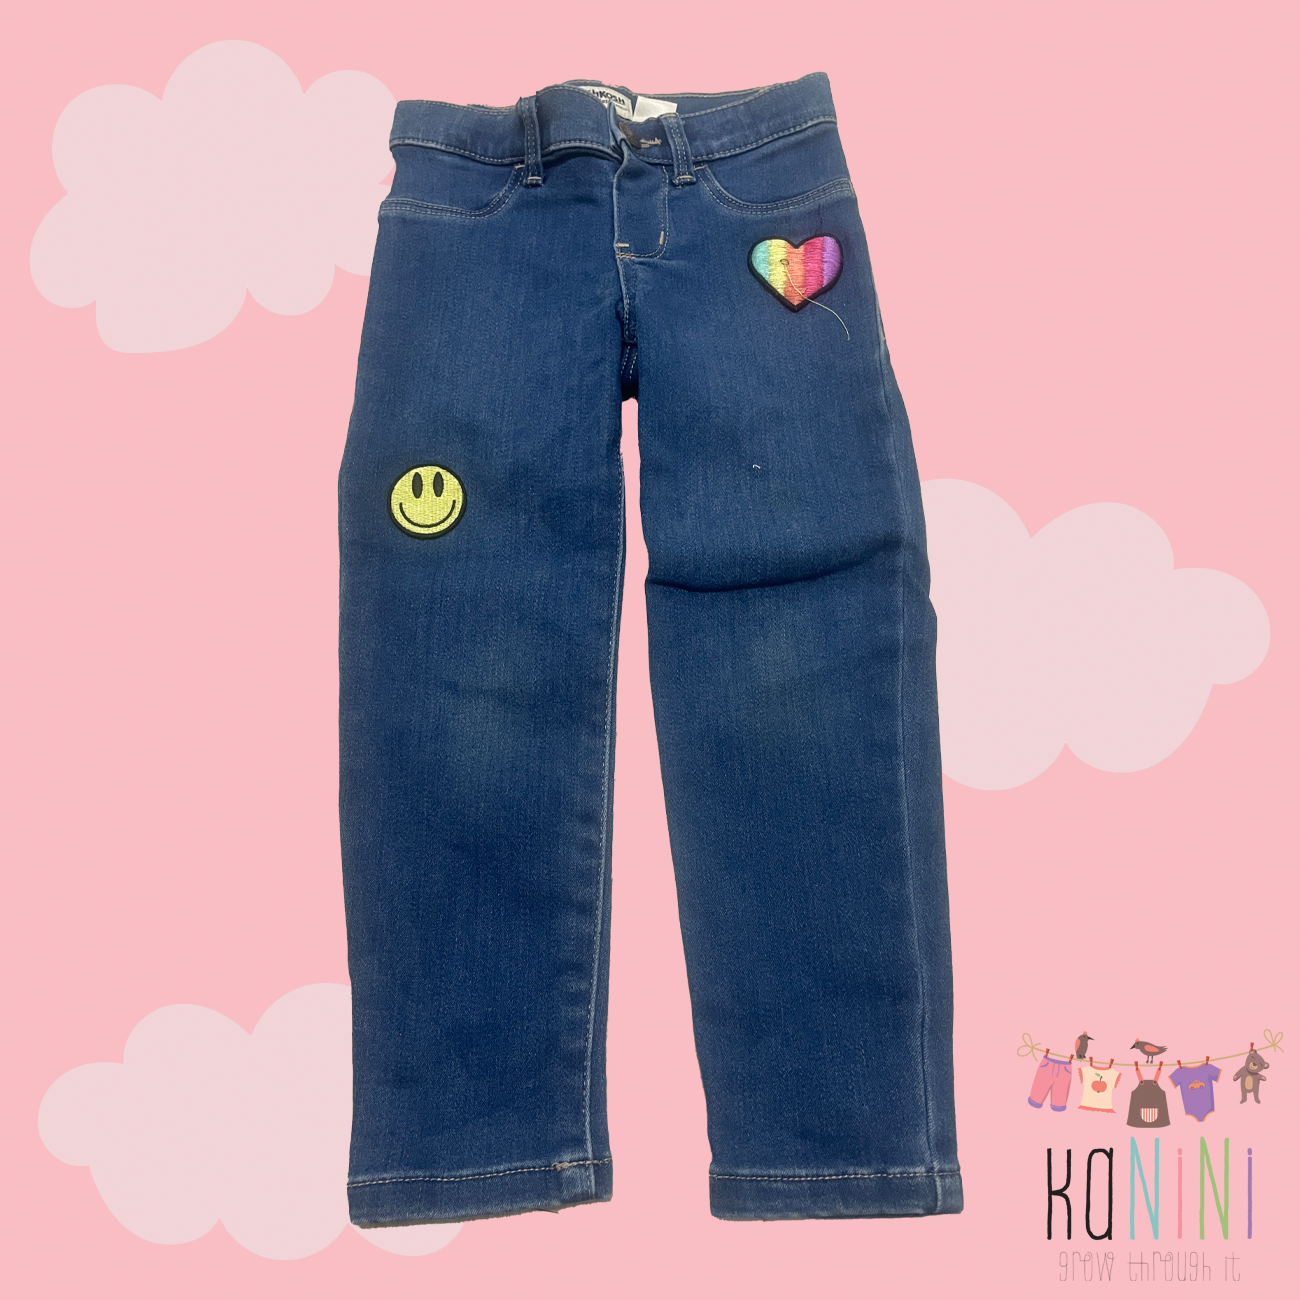 Featured image for “OshKosh B'Gosh 4 Years Girls Skinny Jeans”